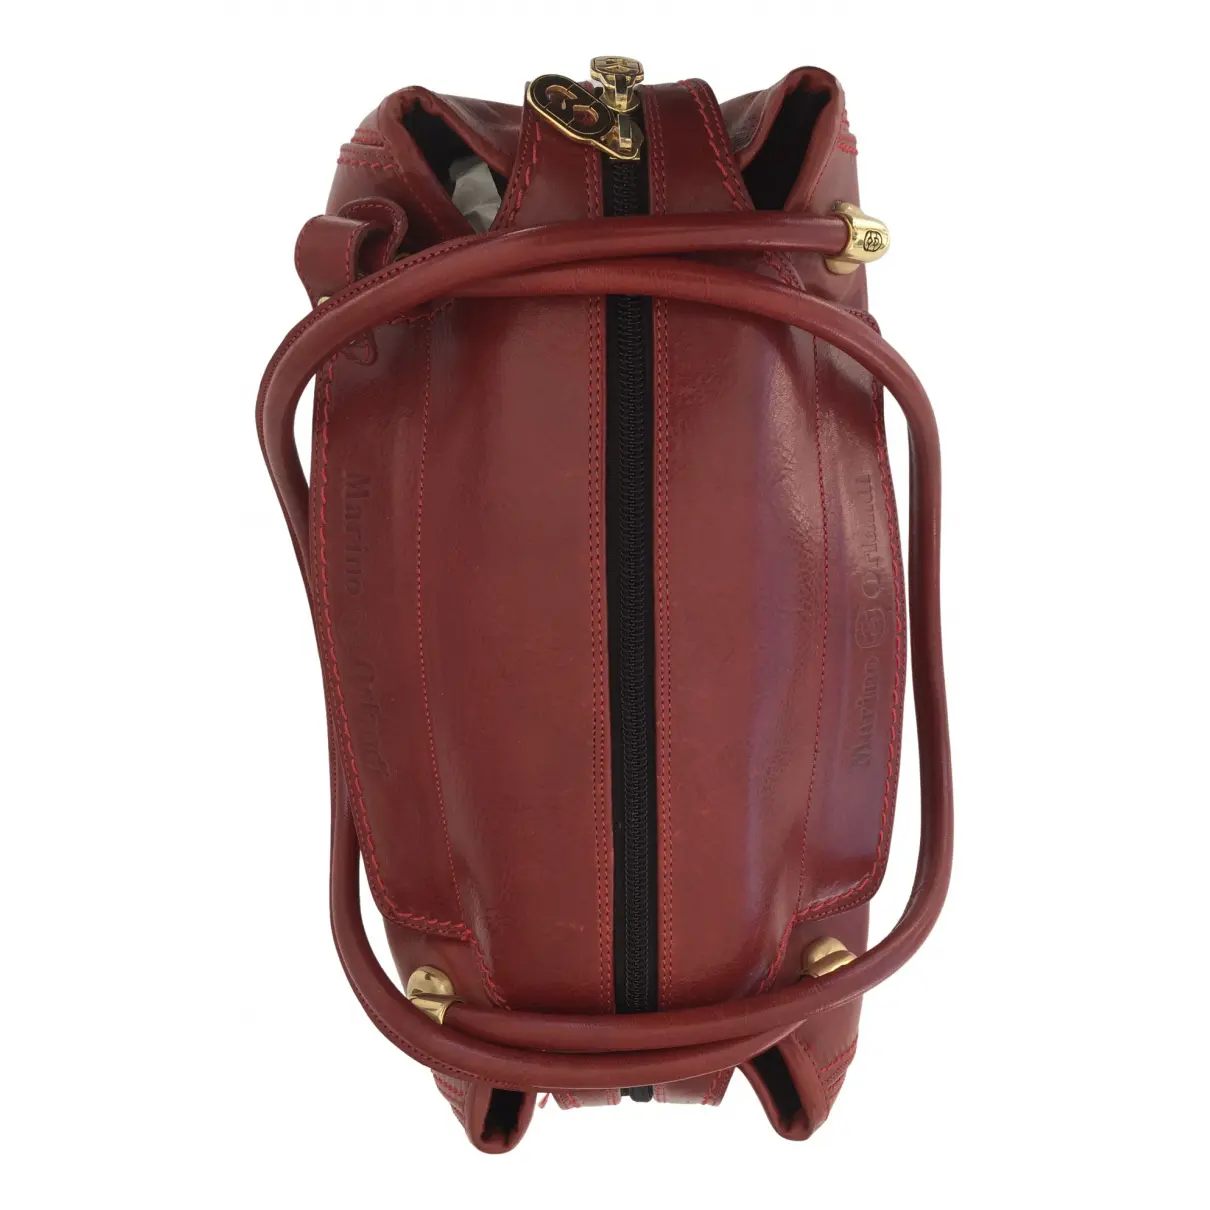 Buy Marino Orlandi Leather handbag online